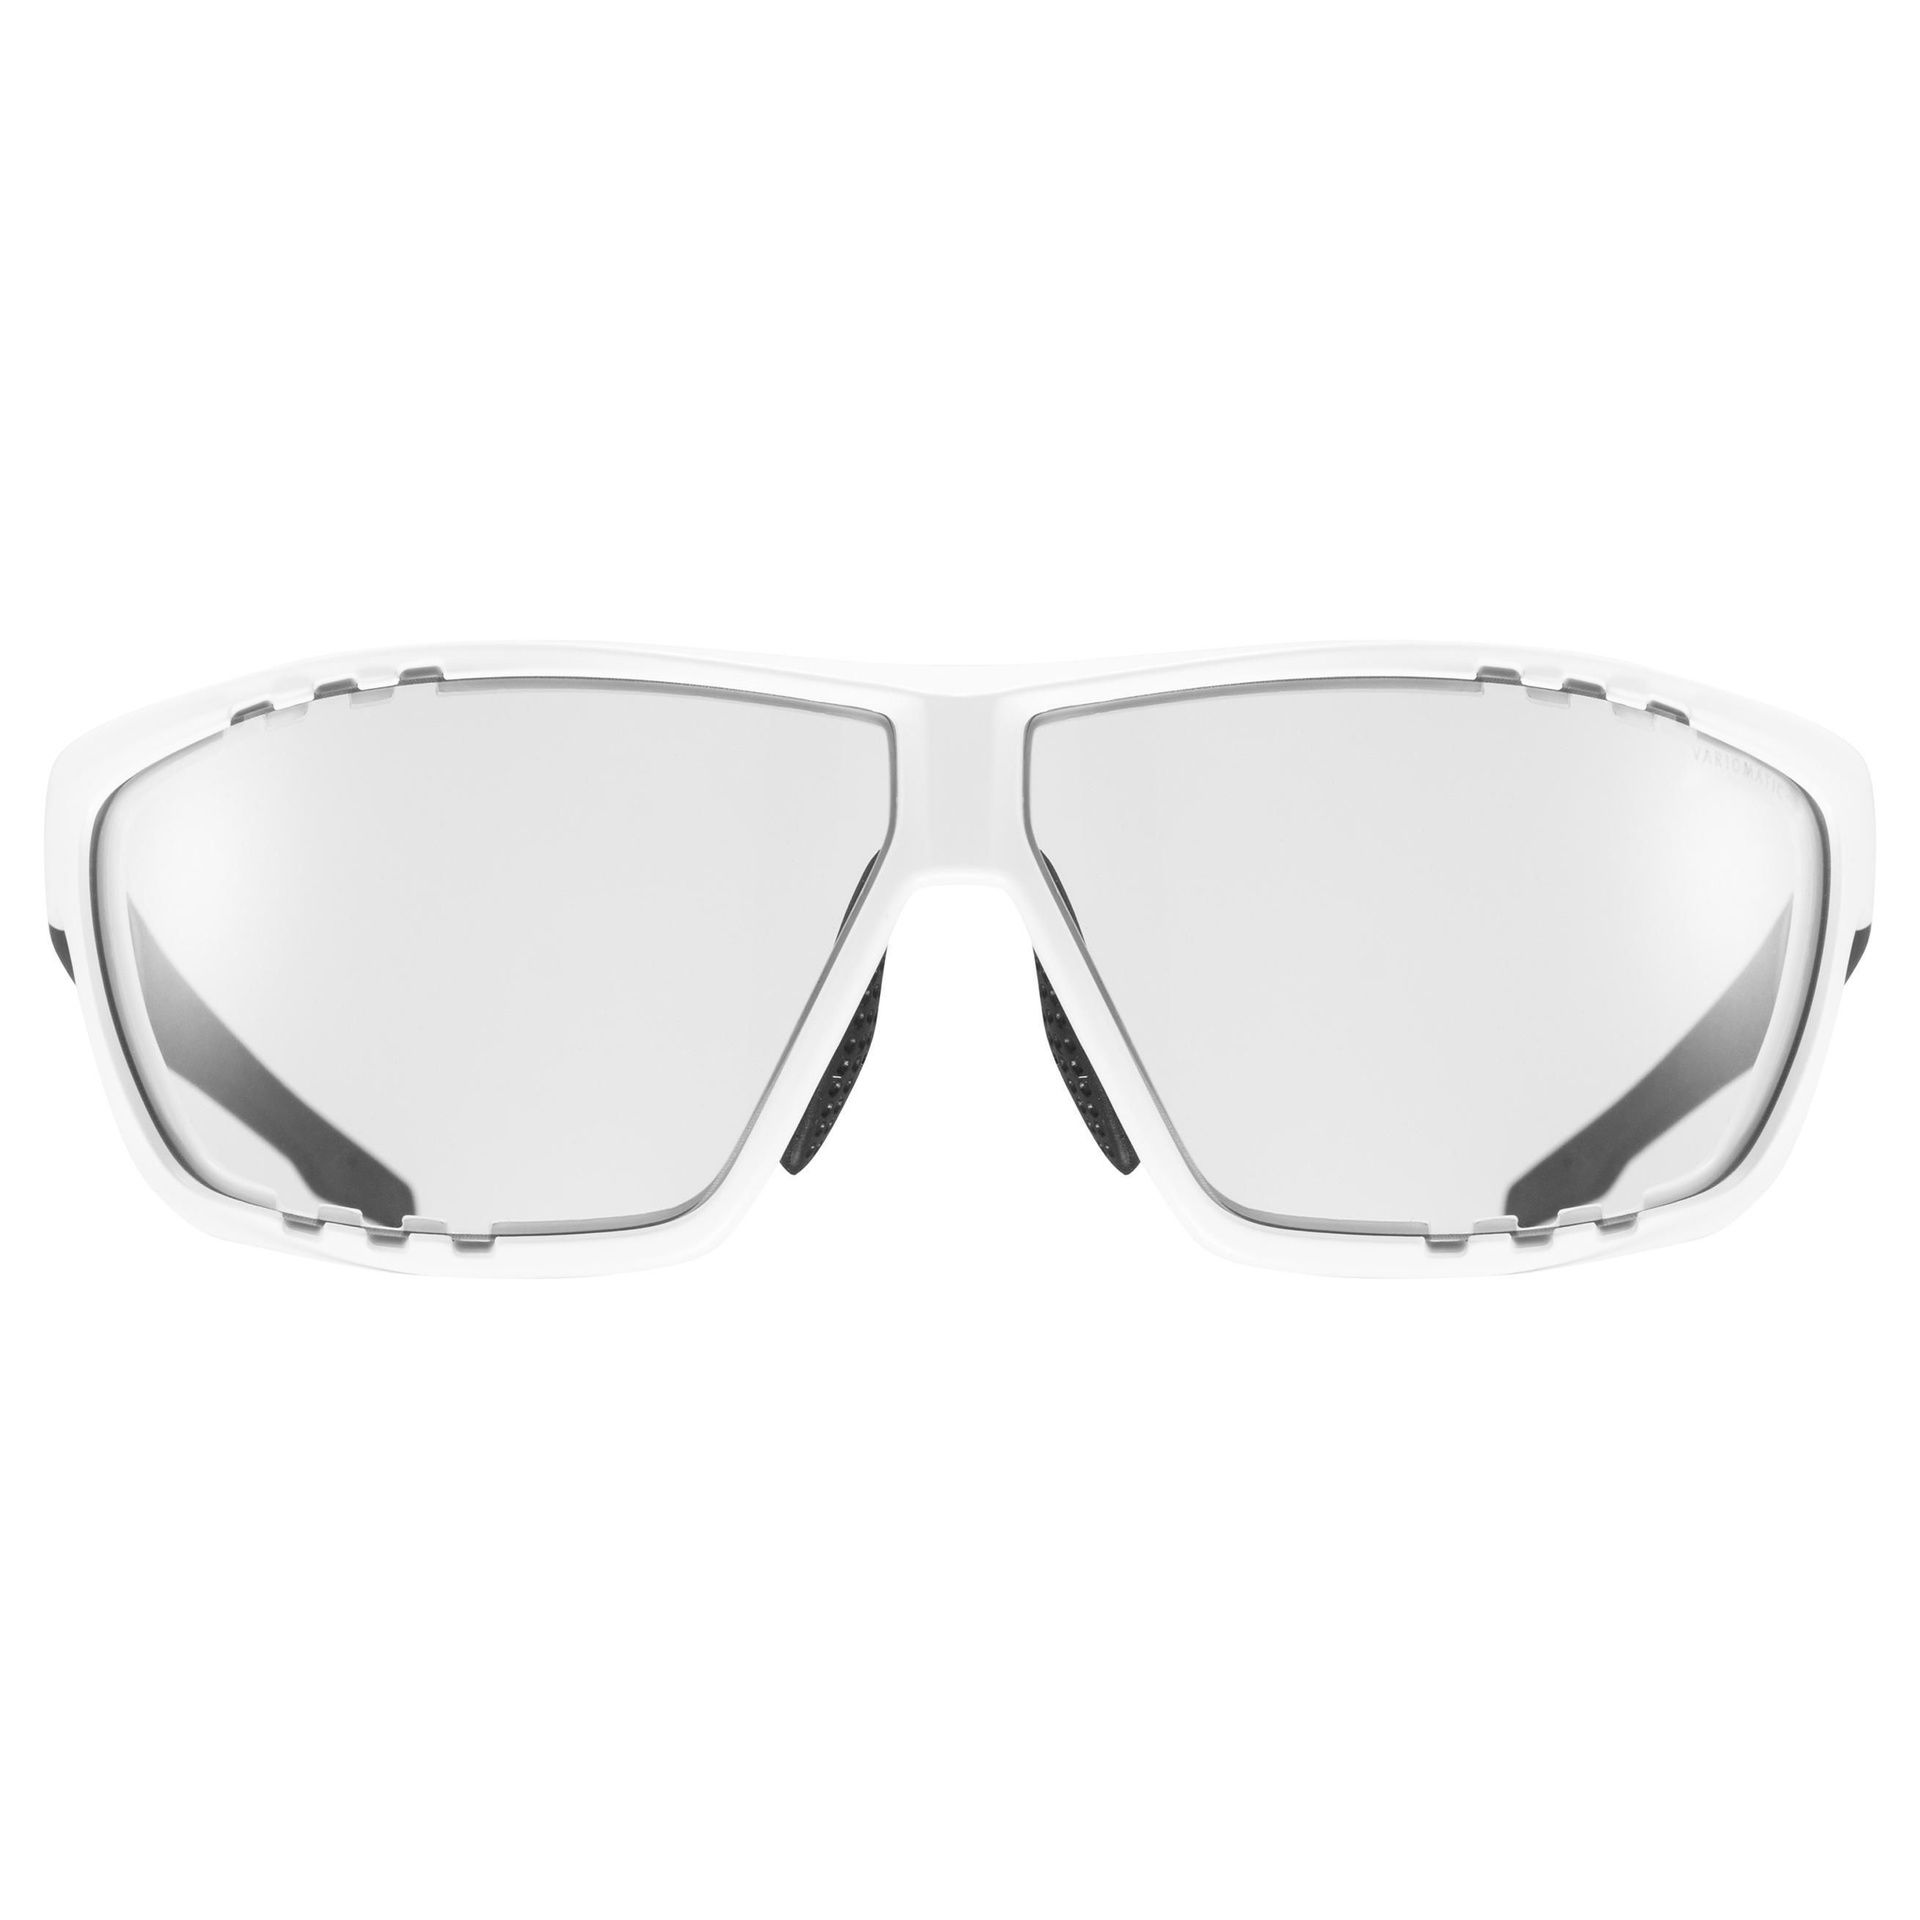 slnečné okuliare uvex sportstyle 706 V white mat black